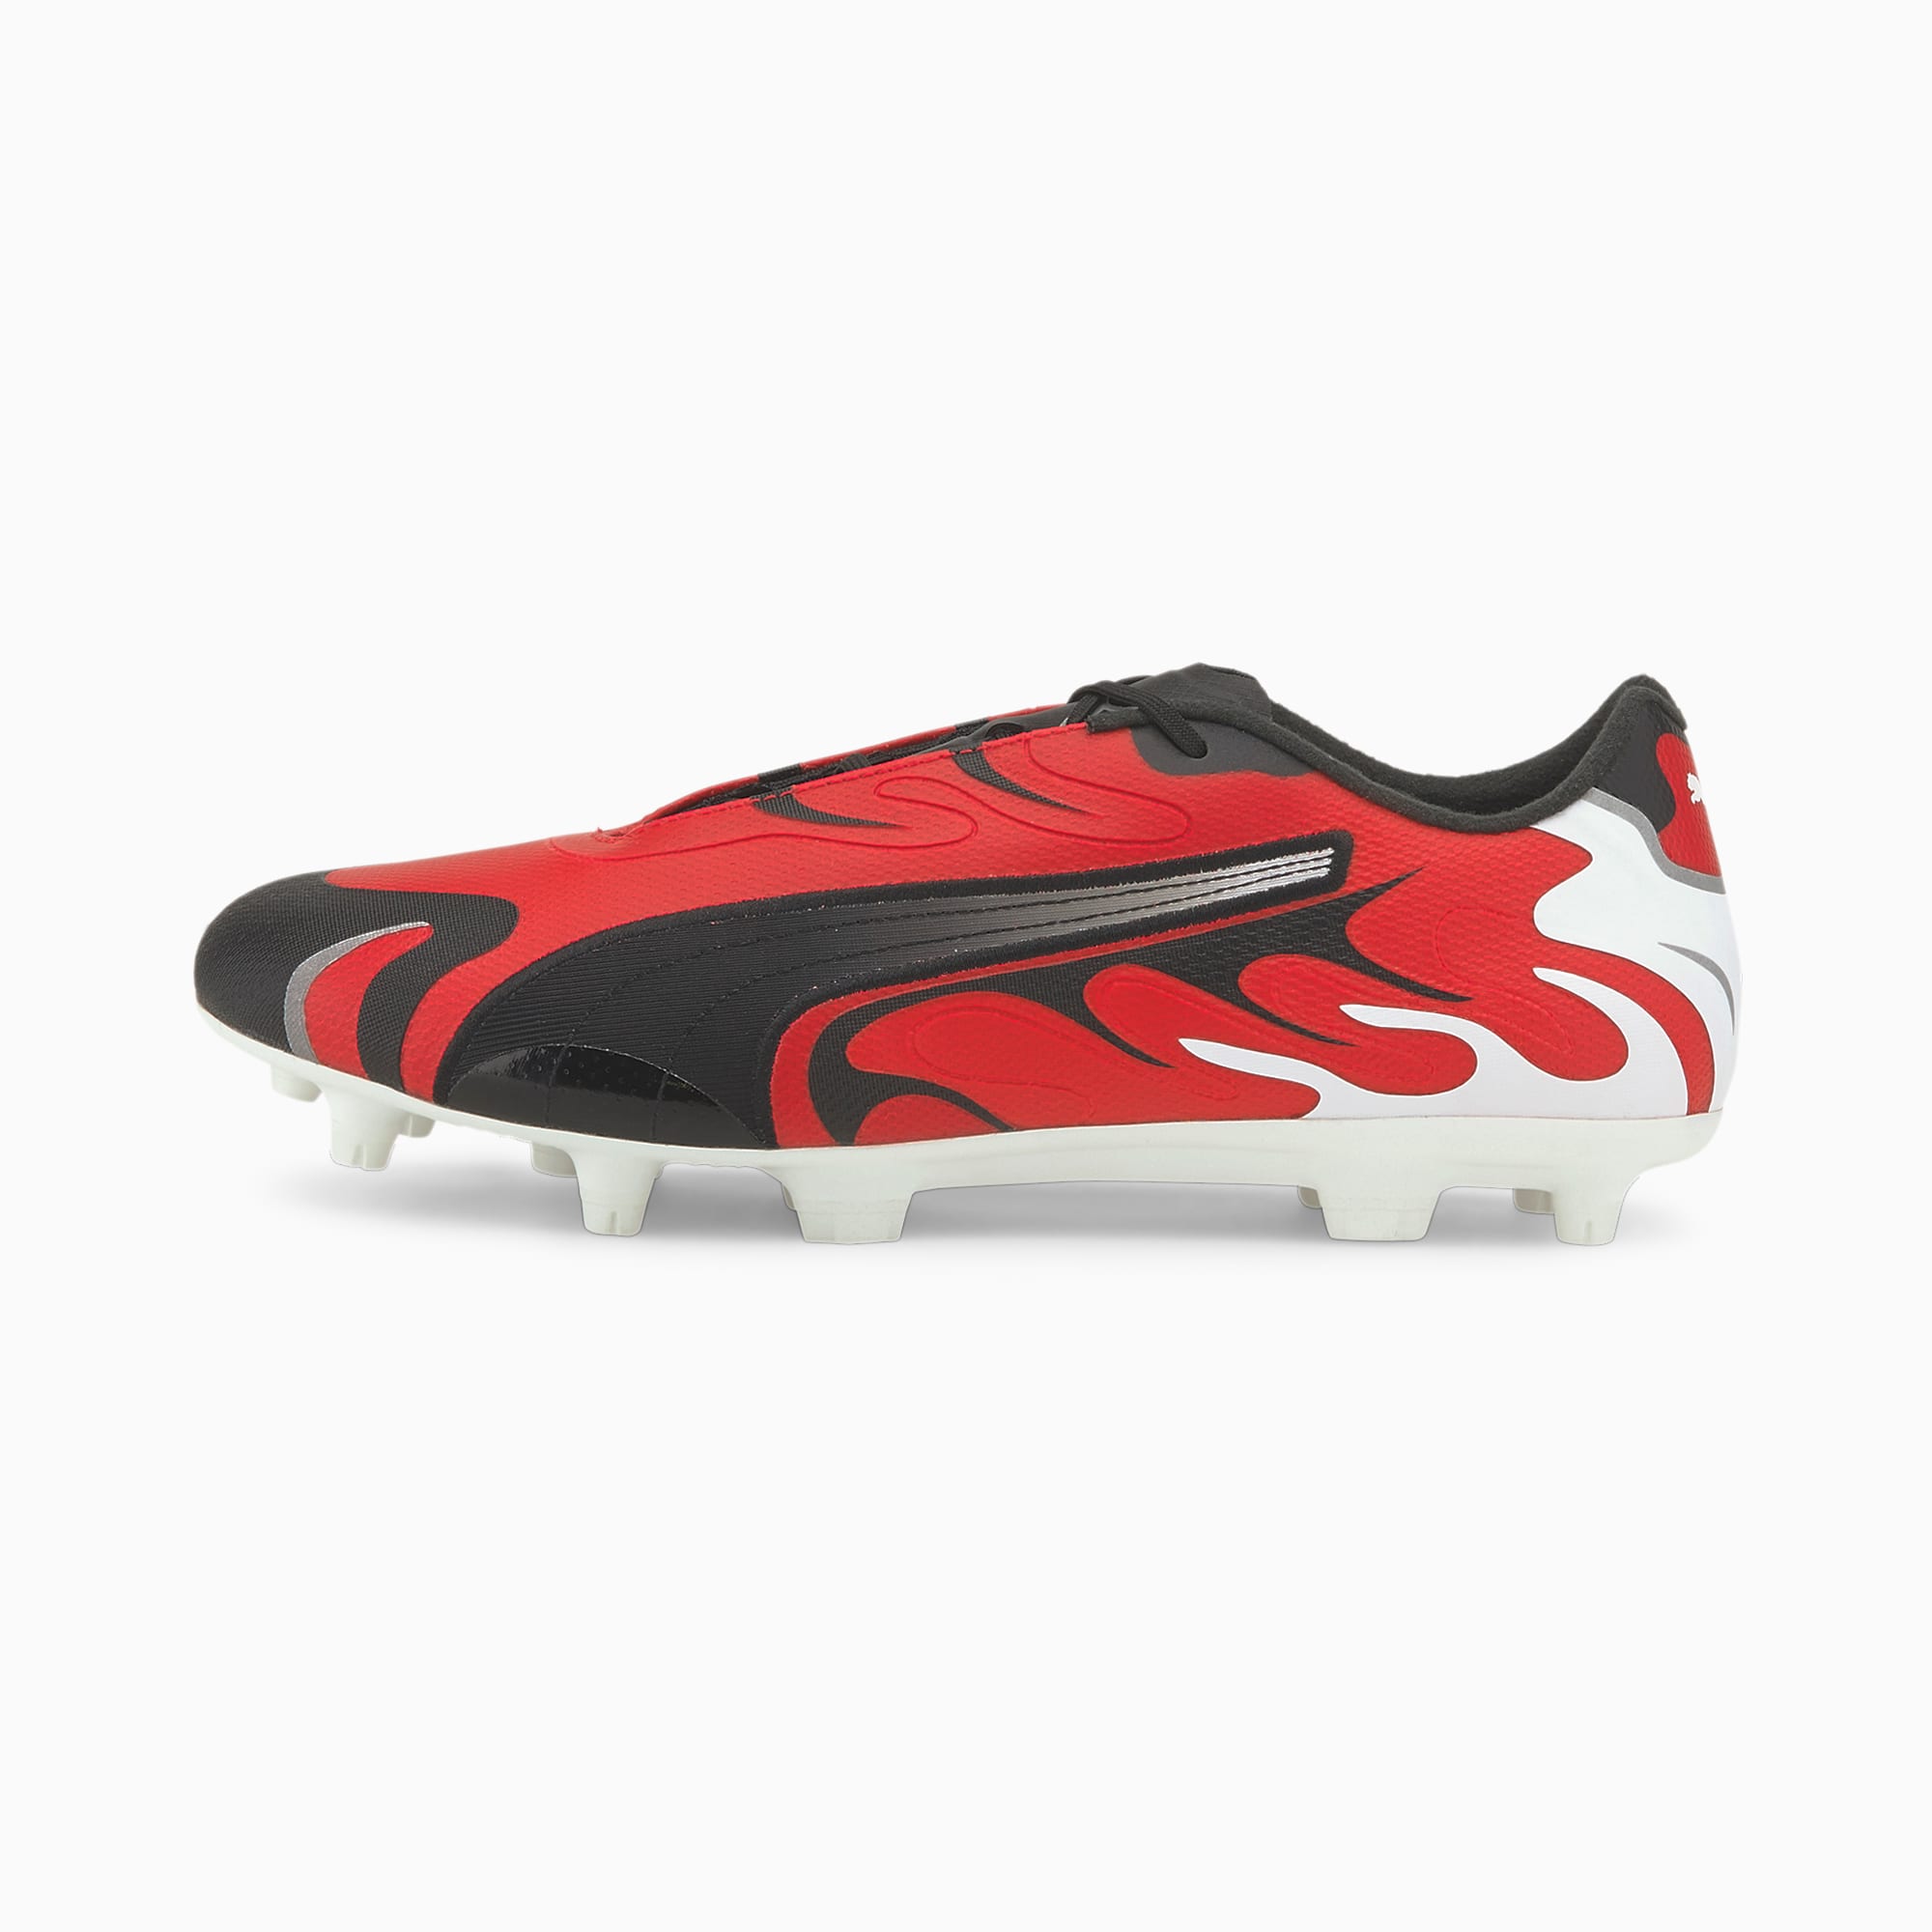 red puma football boots